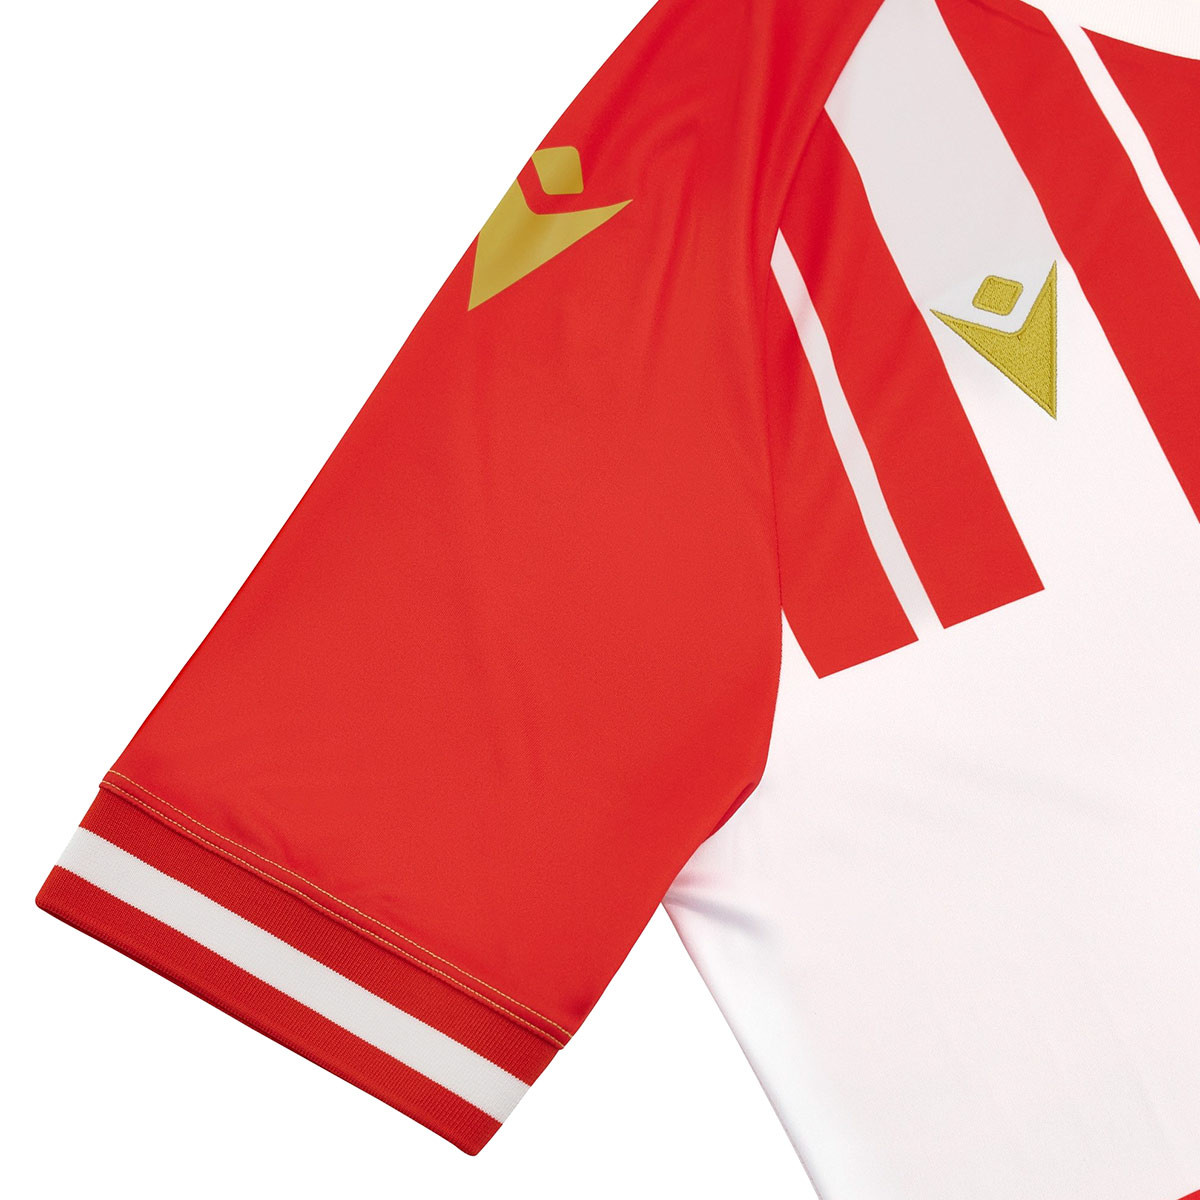 Macron home kit jersey 22/23 – Red Star Shop